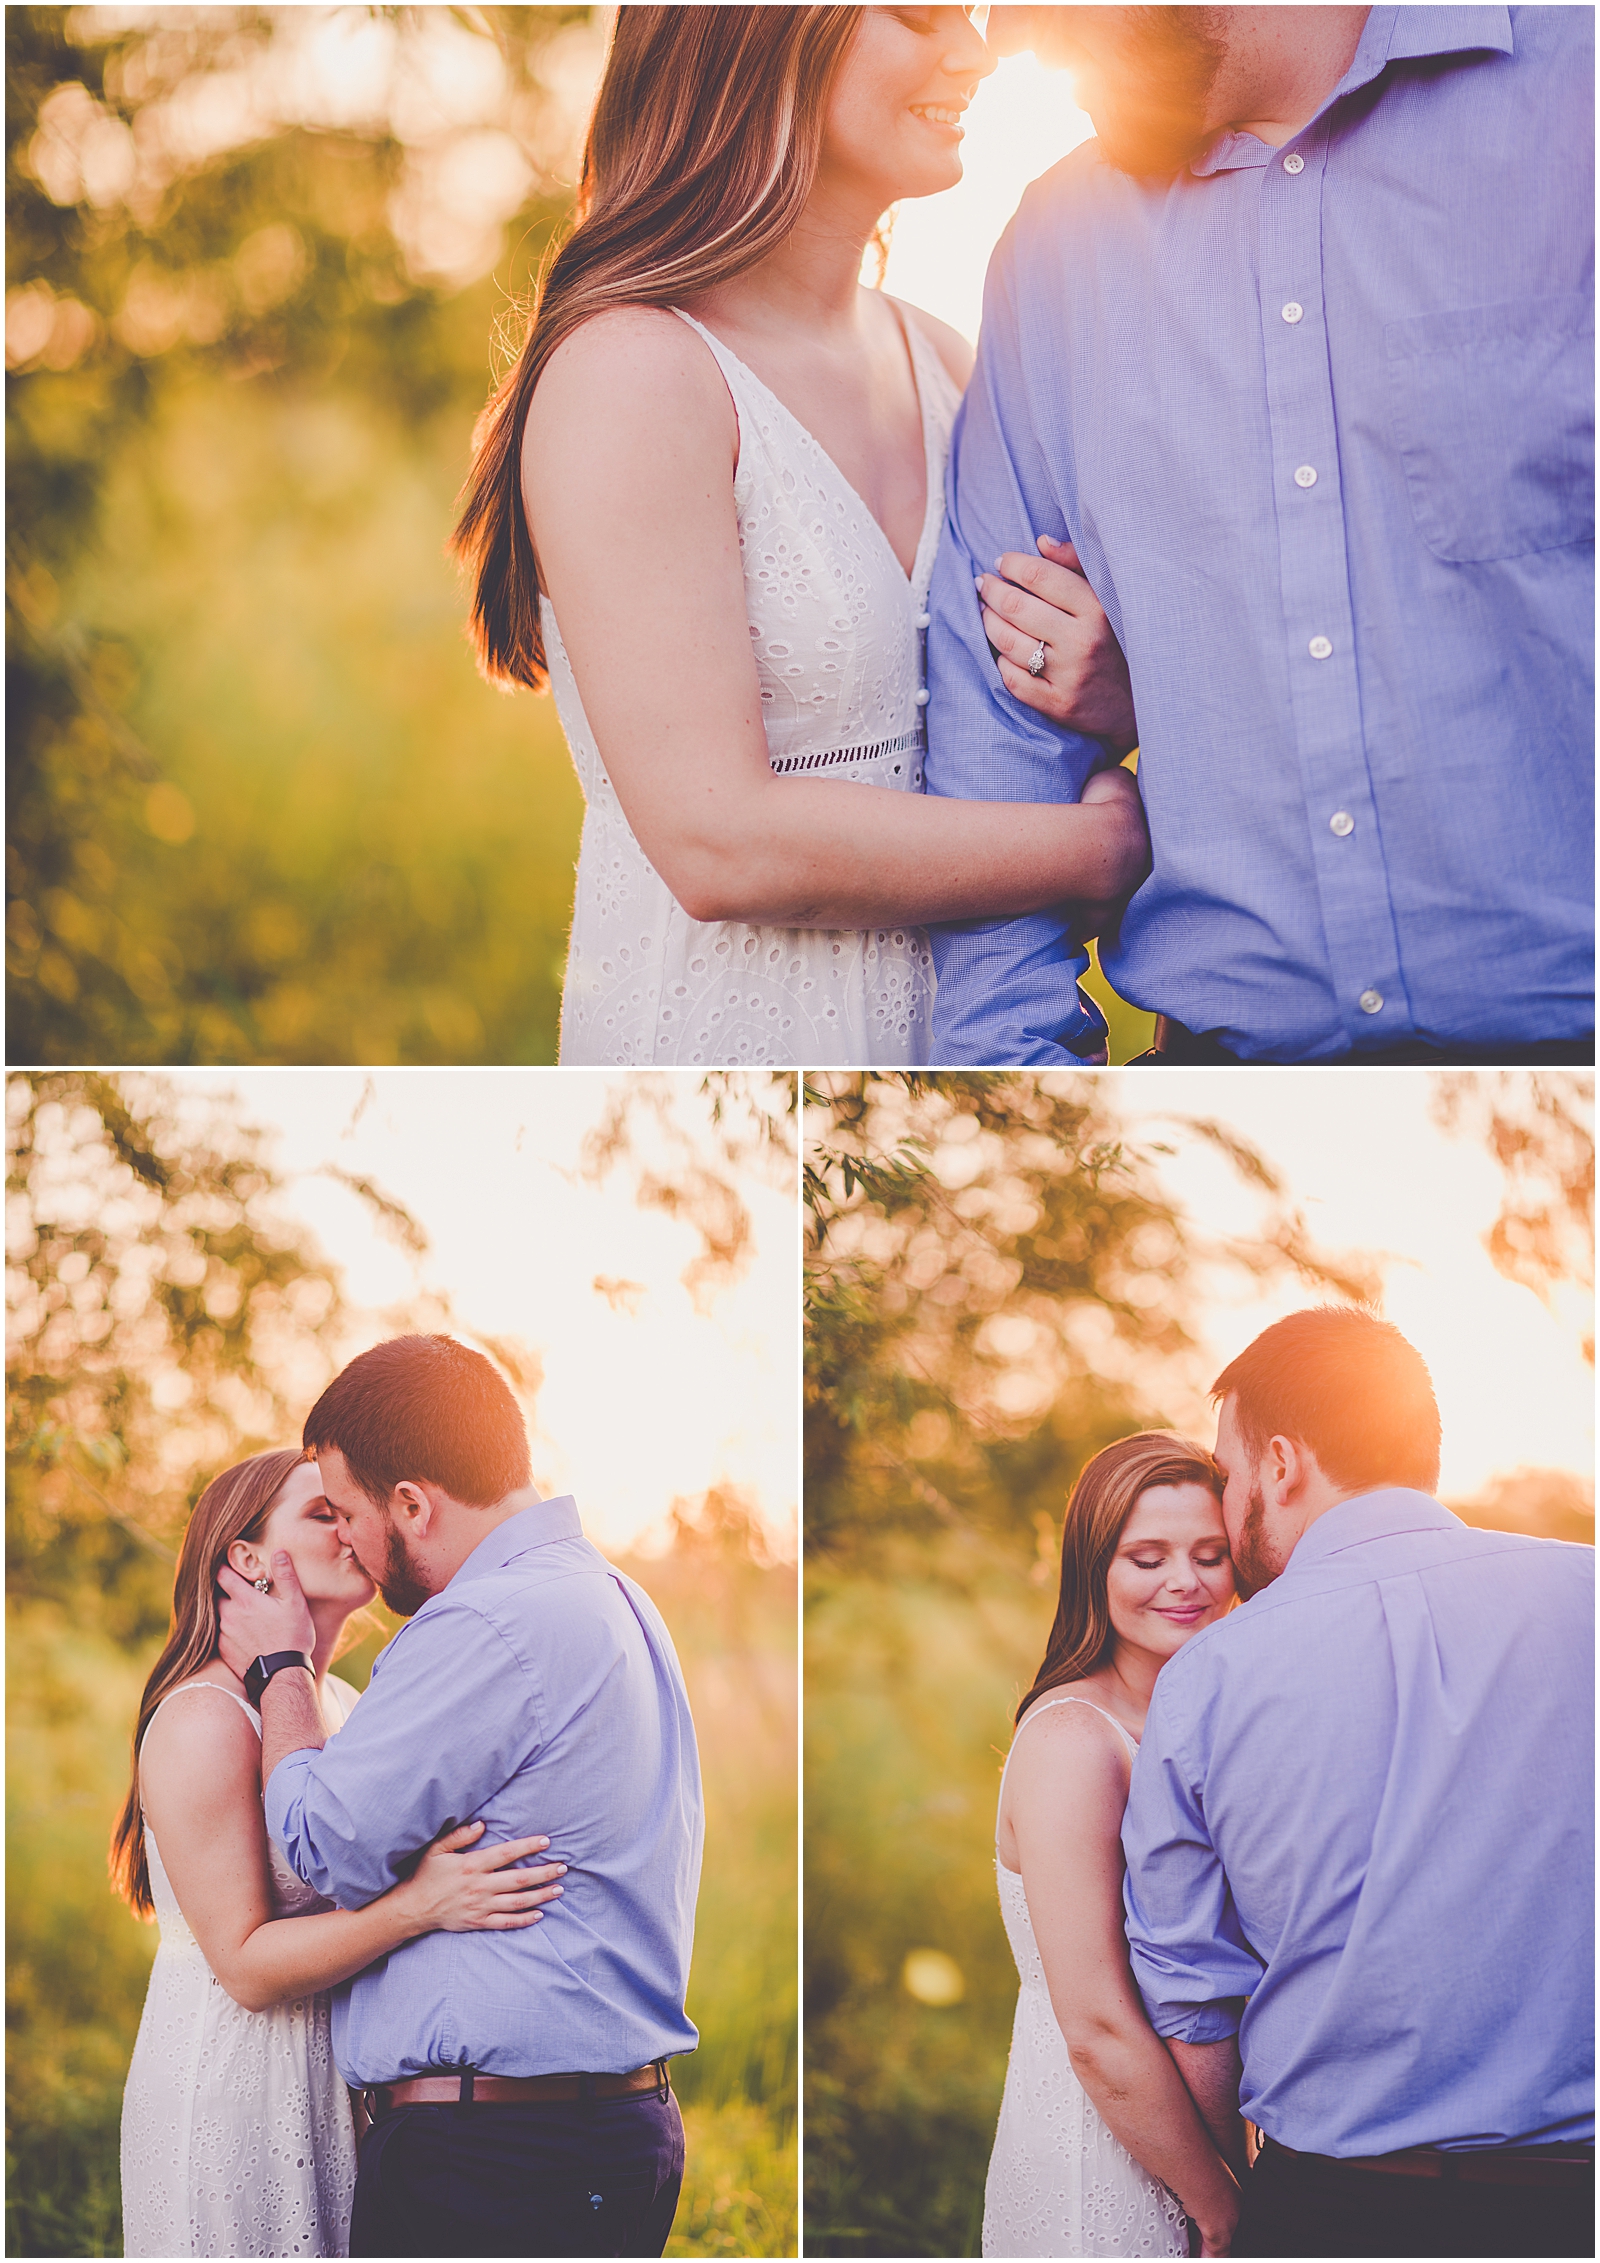 Summer engagement photos at Perry Farm in Bourbonnais, Illinois with Chicagoland wedding photographer Kara Evans Photographer.